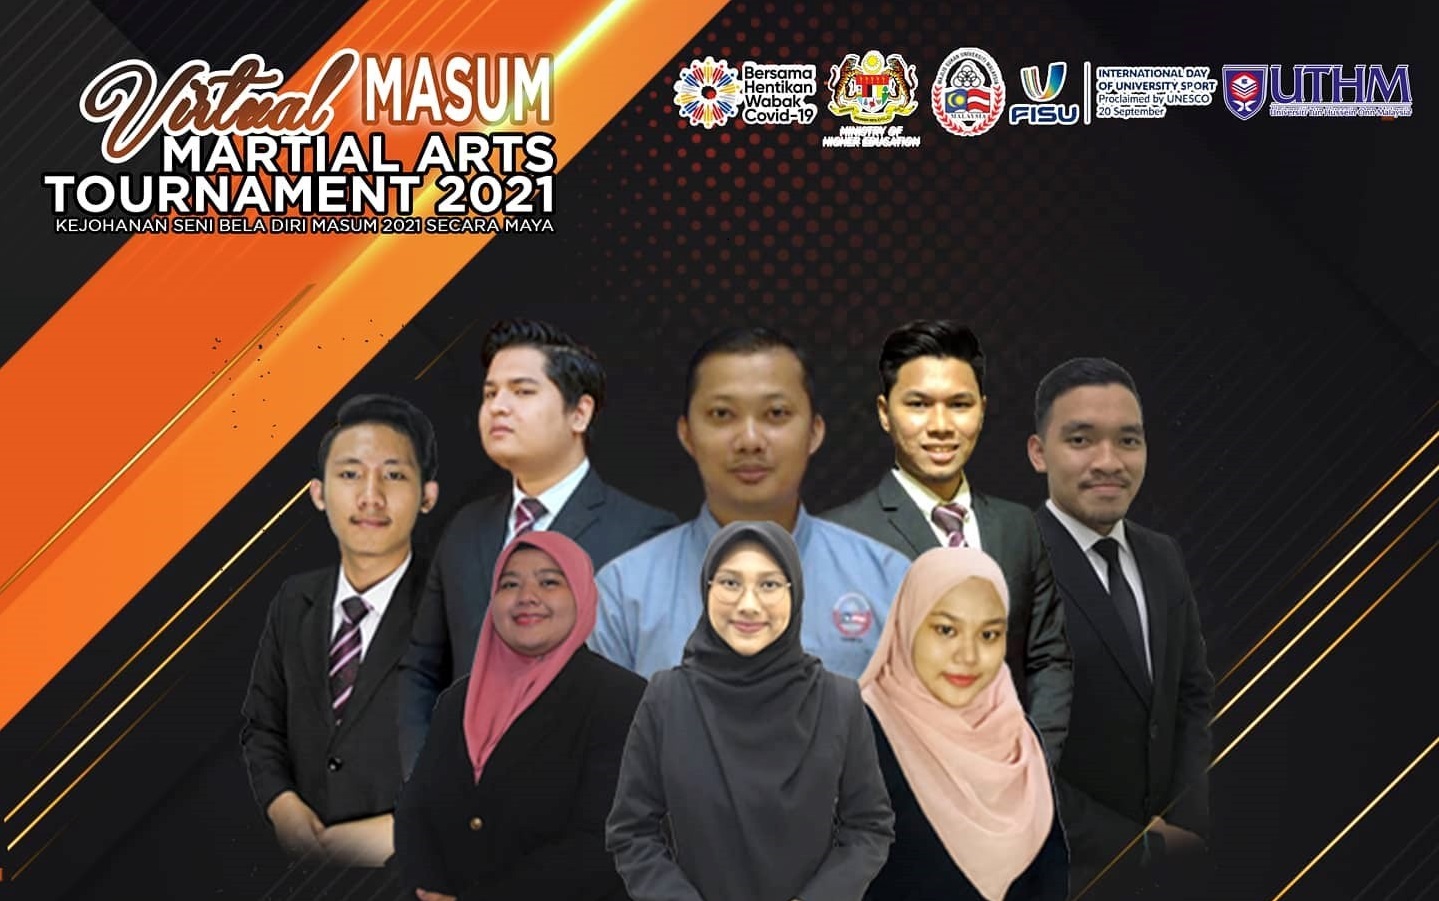 Tujuh penuntut UTHM jadi sukarelawan MASUM Virtual Martial Arts Tournament 2021